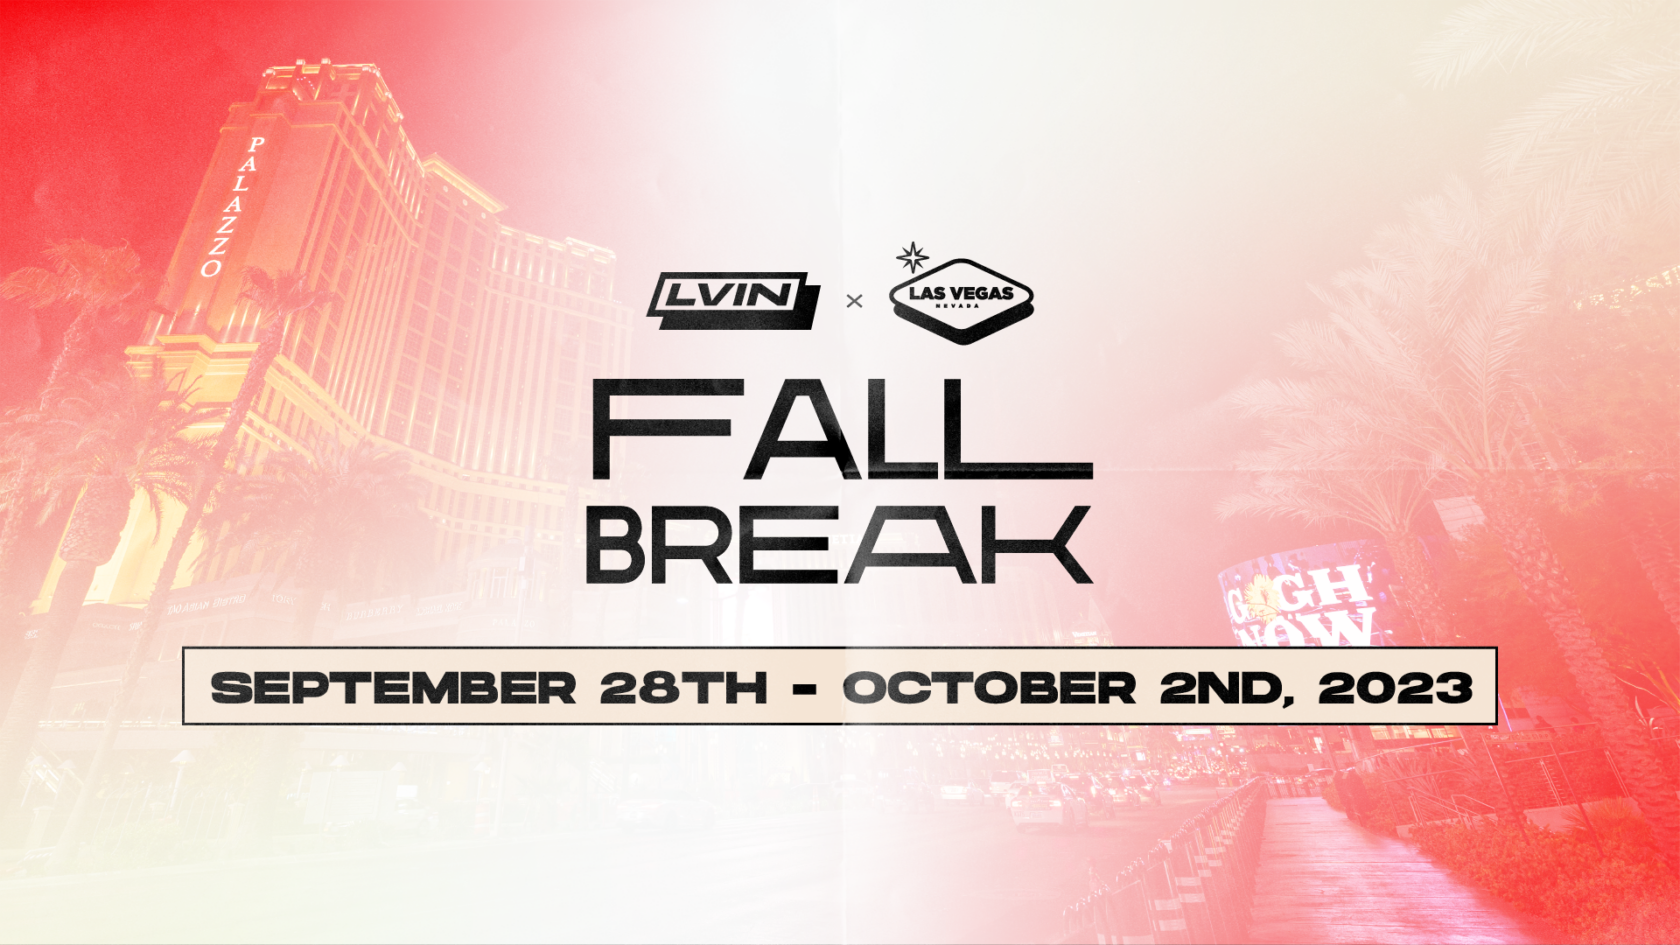 Las Vegas Fall Break 2023 LVIN Travel, Hotels, Nightlife